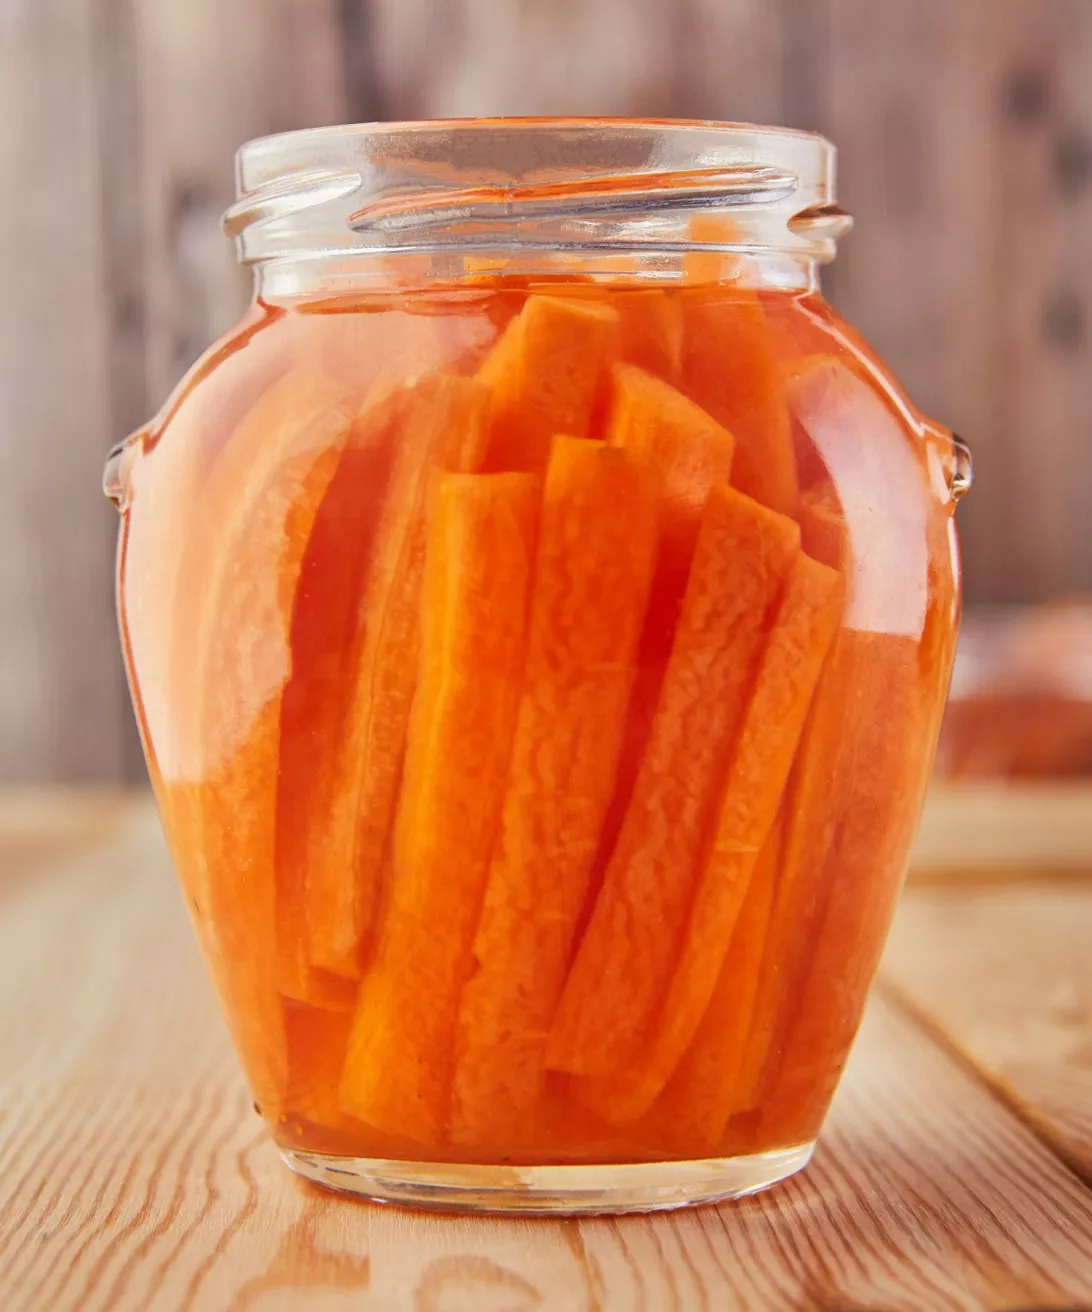 Karotten fermentieren